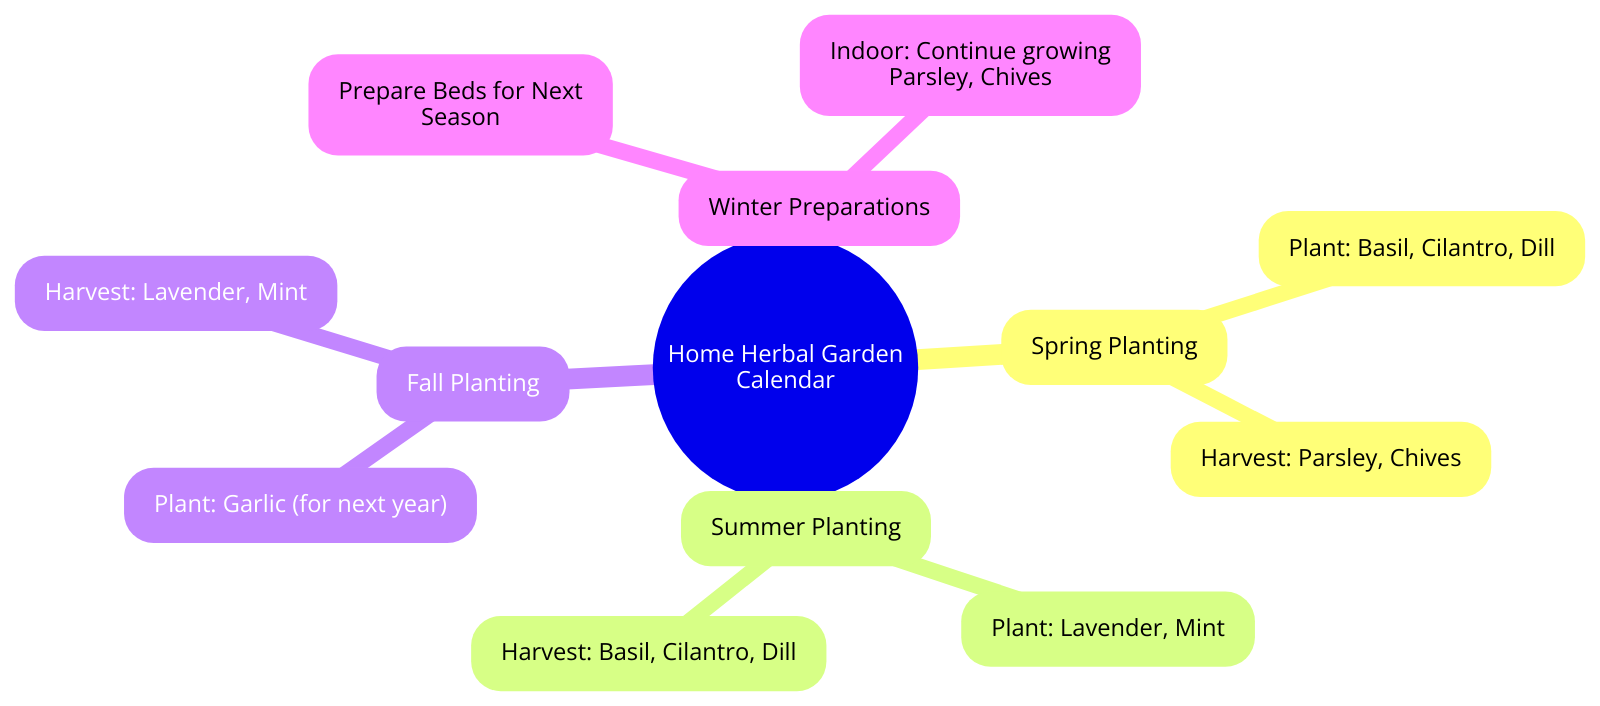 a seasonal planting and harvesting calendar for a home herbal garden